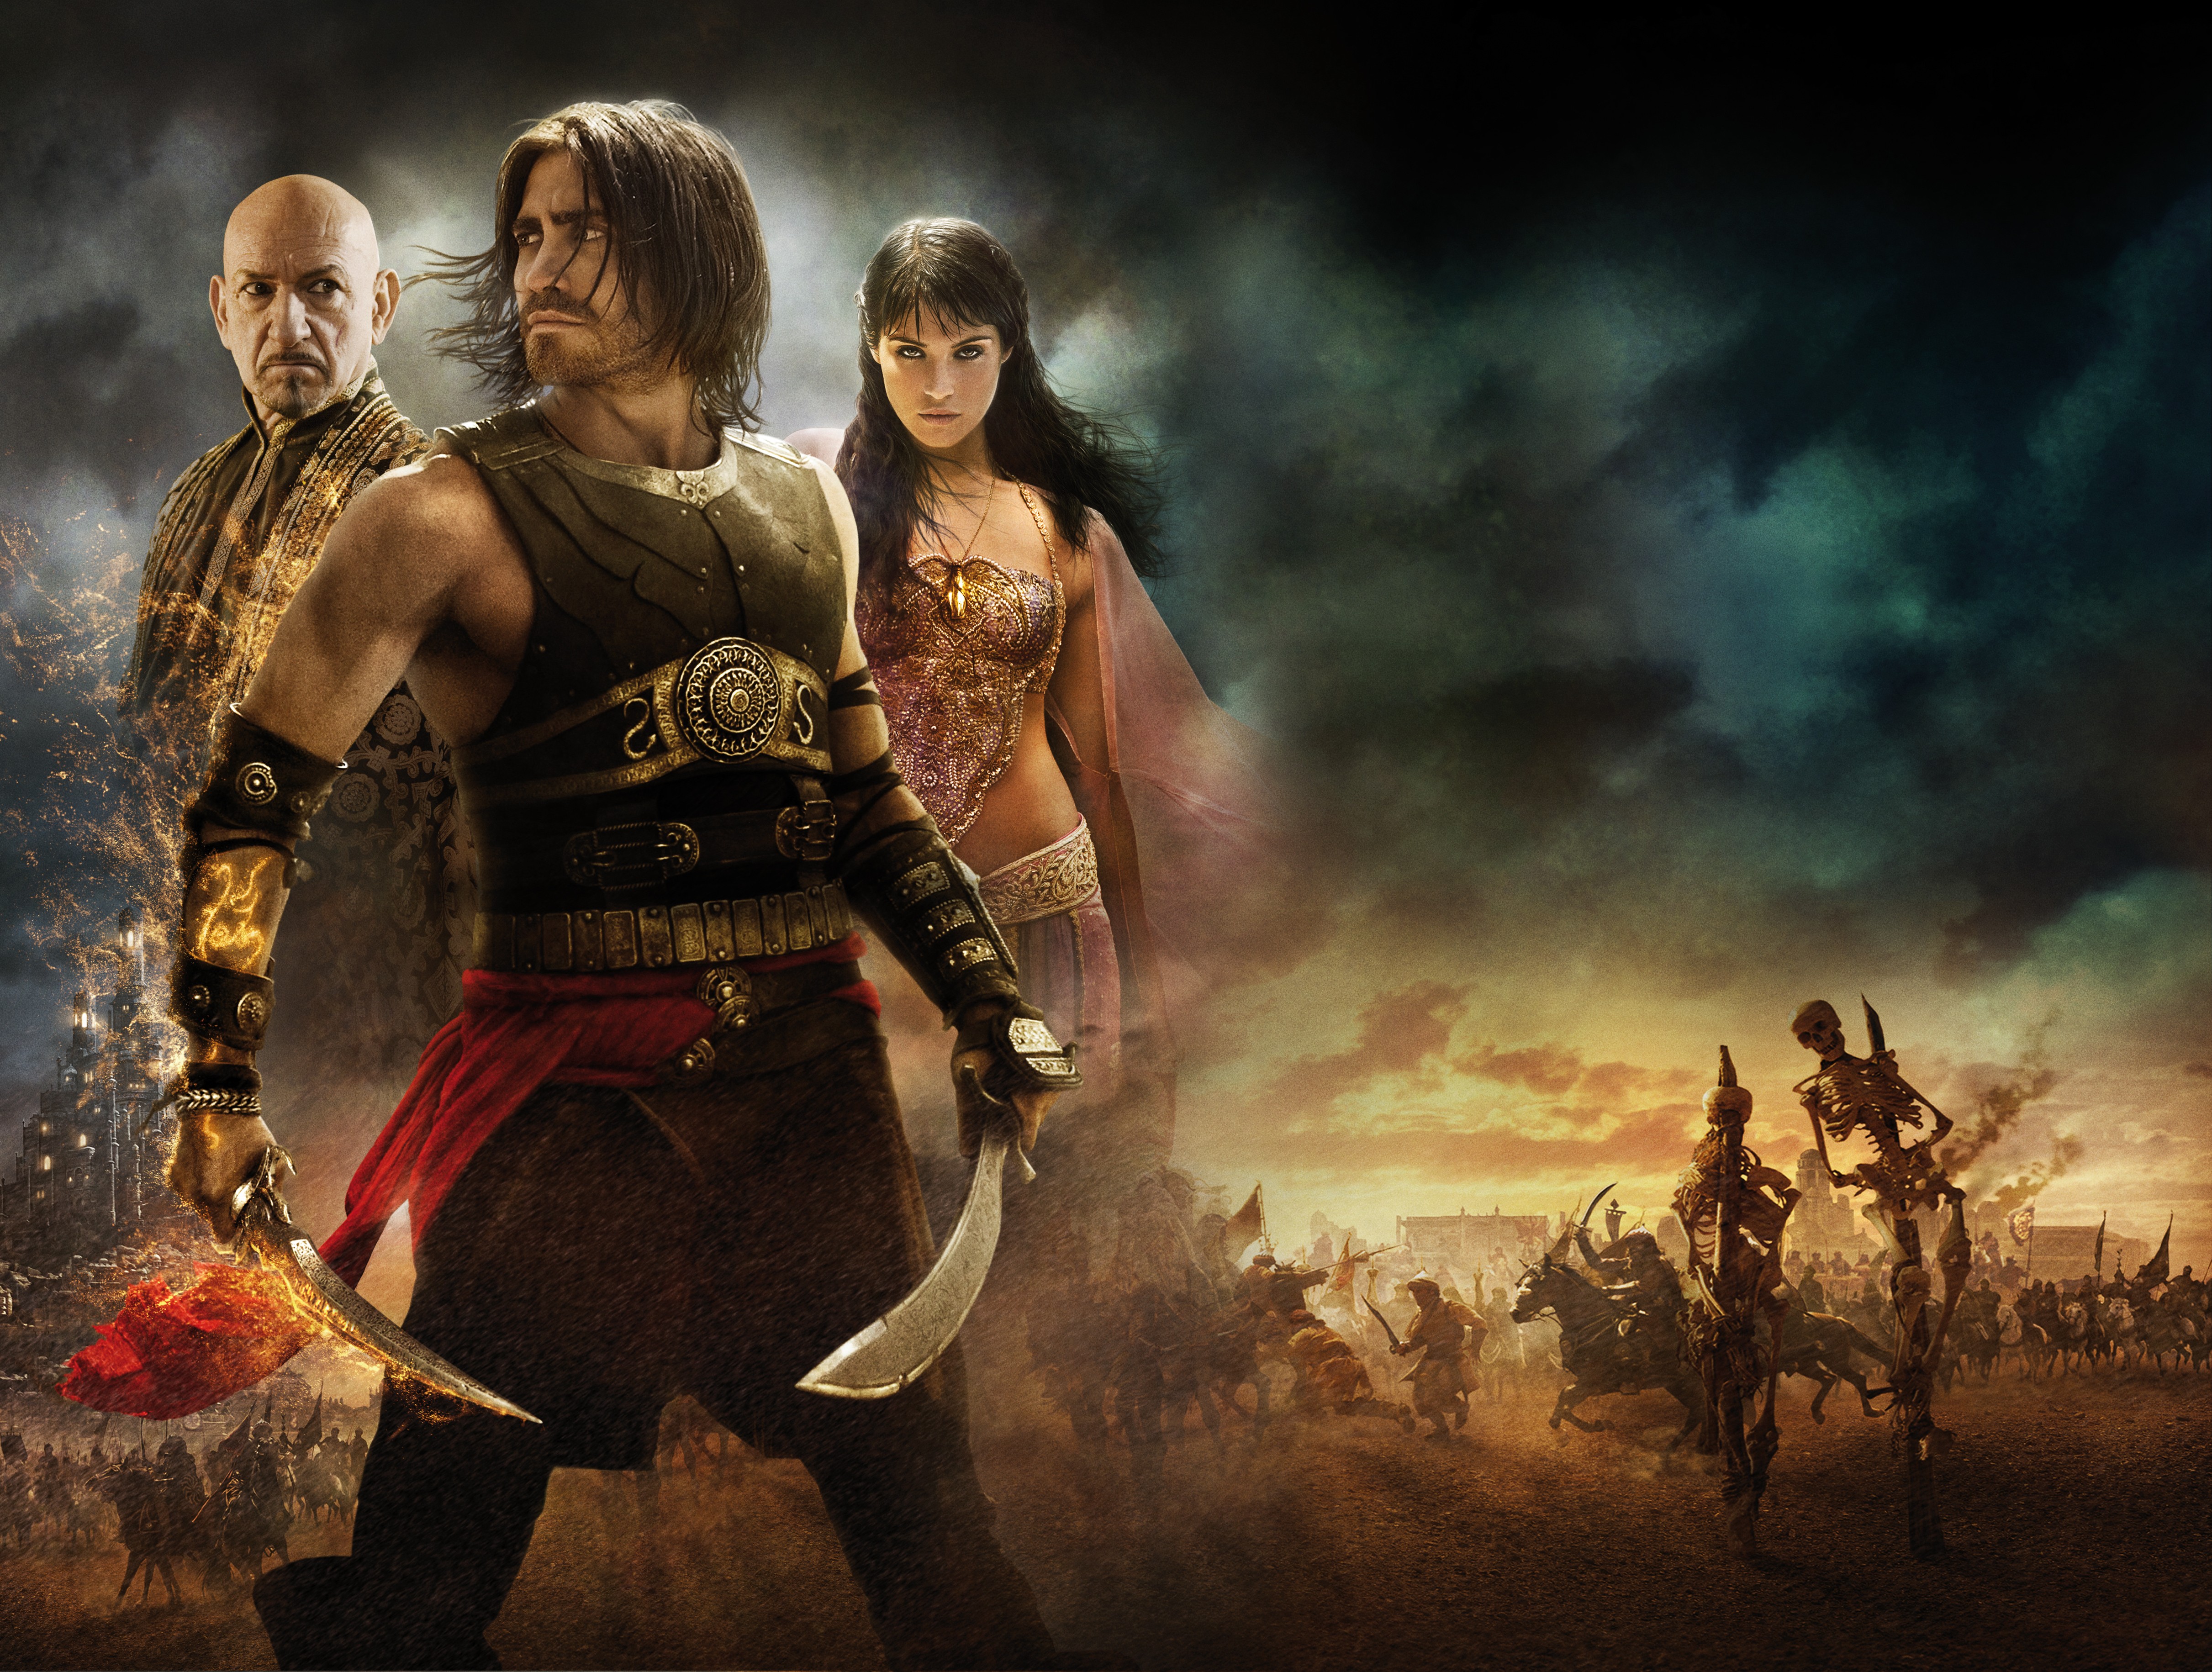 Prince of Persia, Gemma Arterton, Jake Gyllenhaal, Ben Kingsley - desktop wallpaper